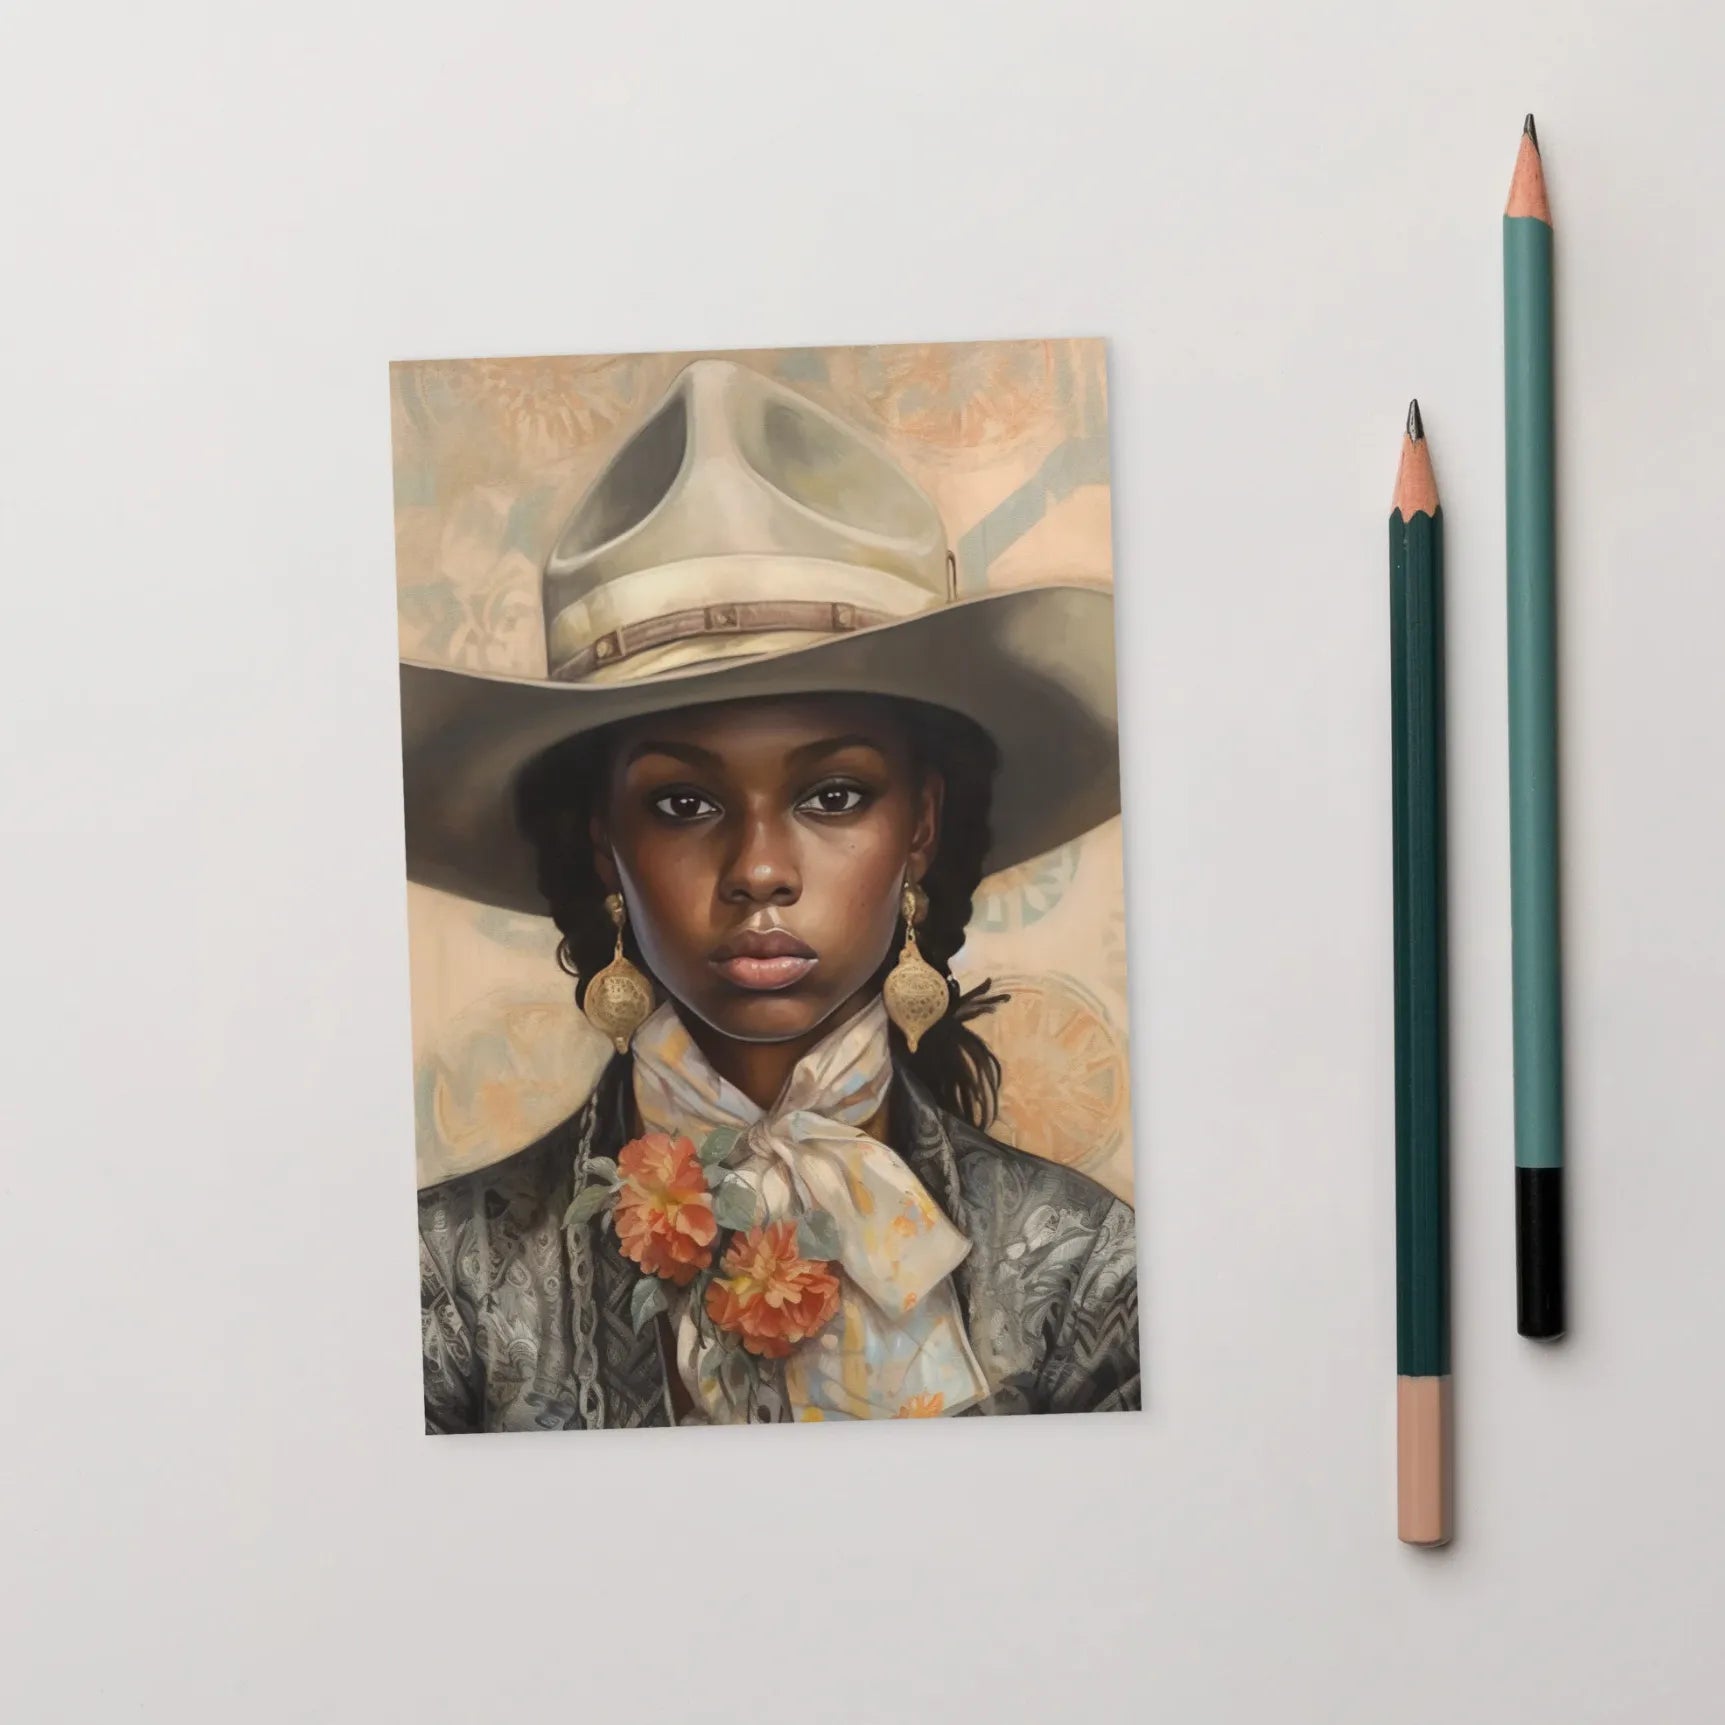 Letitia - Lesbian Black Cowgirl Art Print - Wlw Sapphic Femme - 4’x6’ - Posters Prints & Visual Artwork - Aesthetic Art